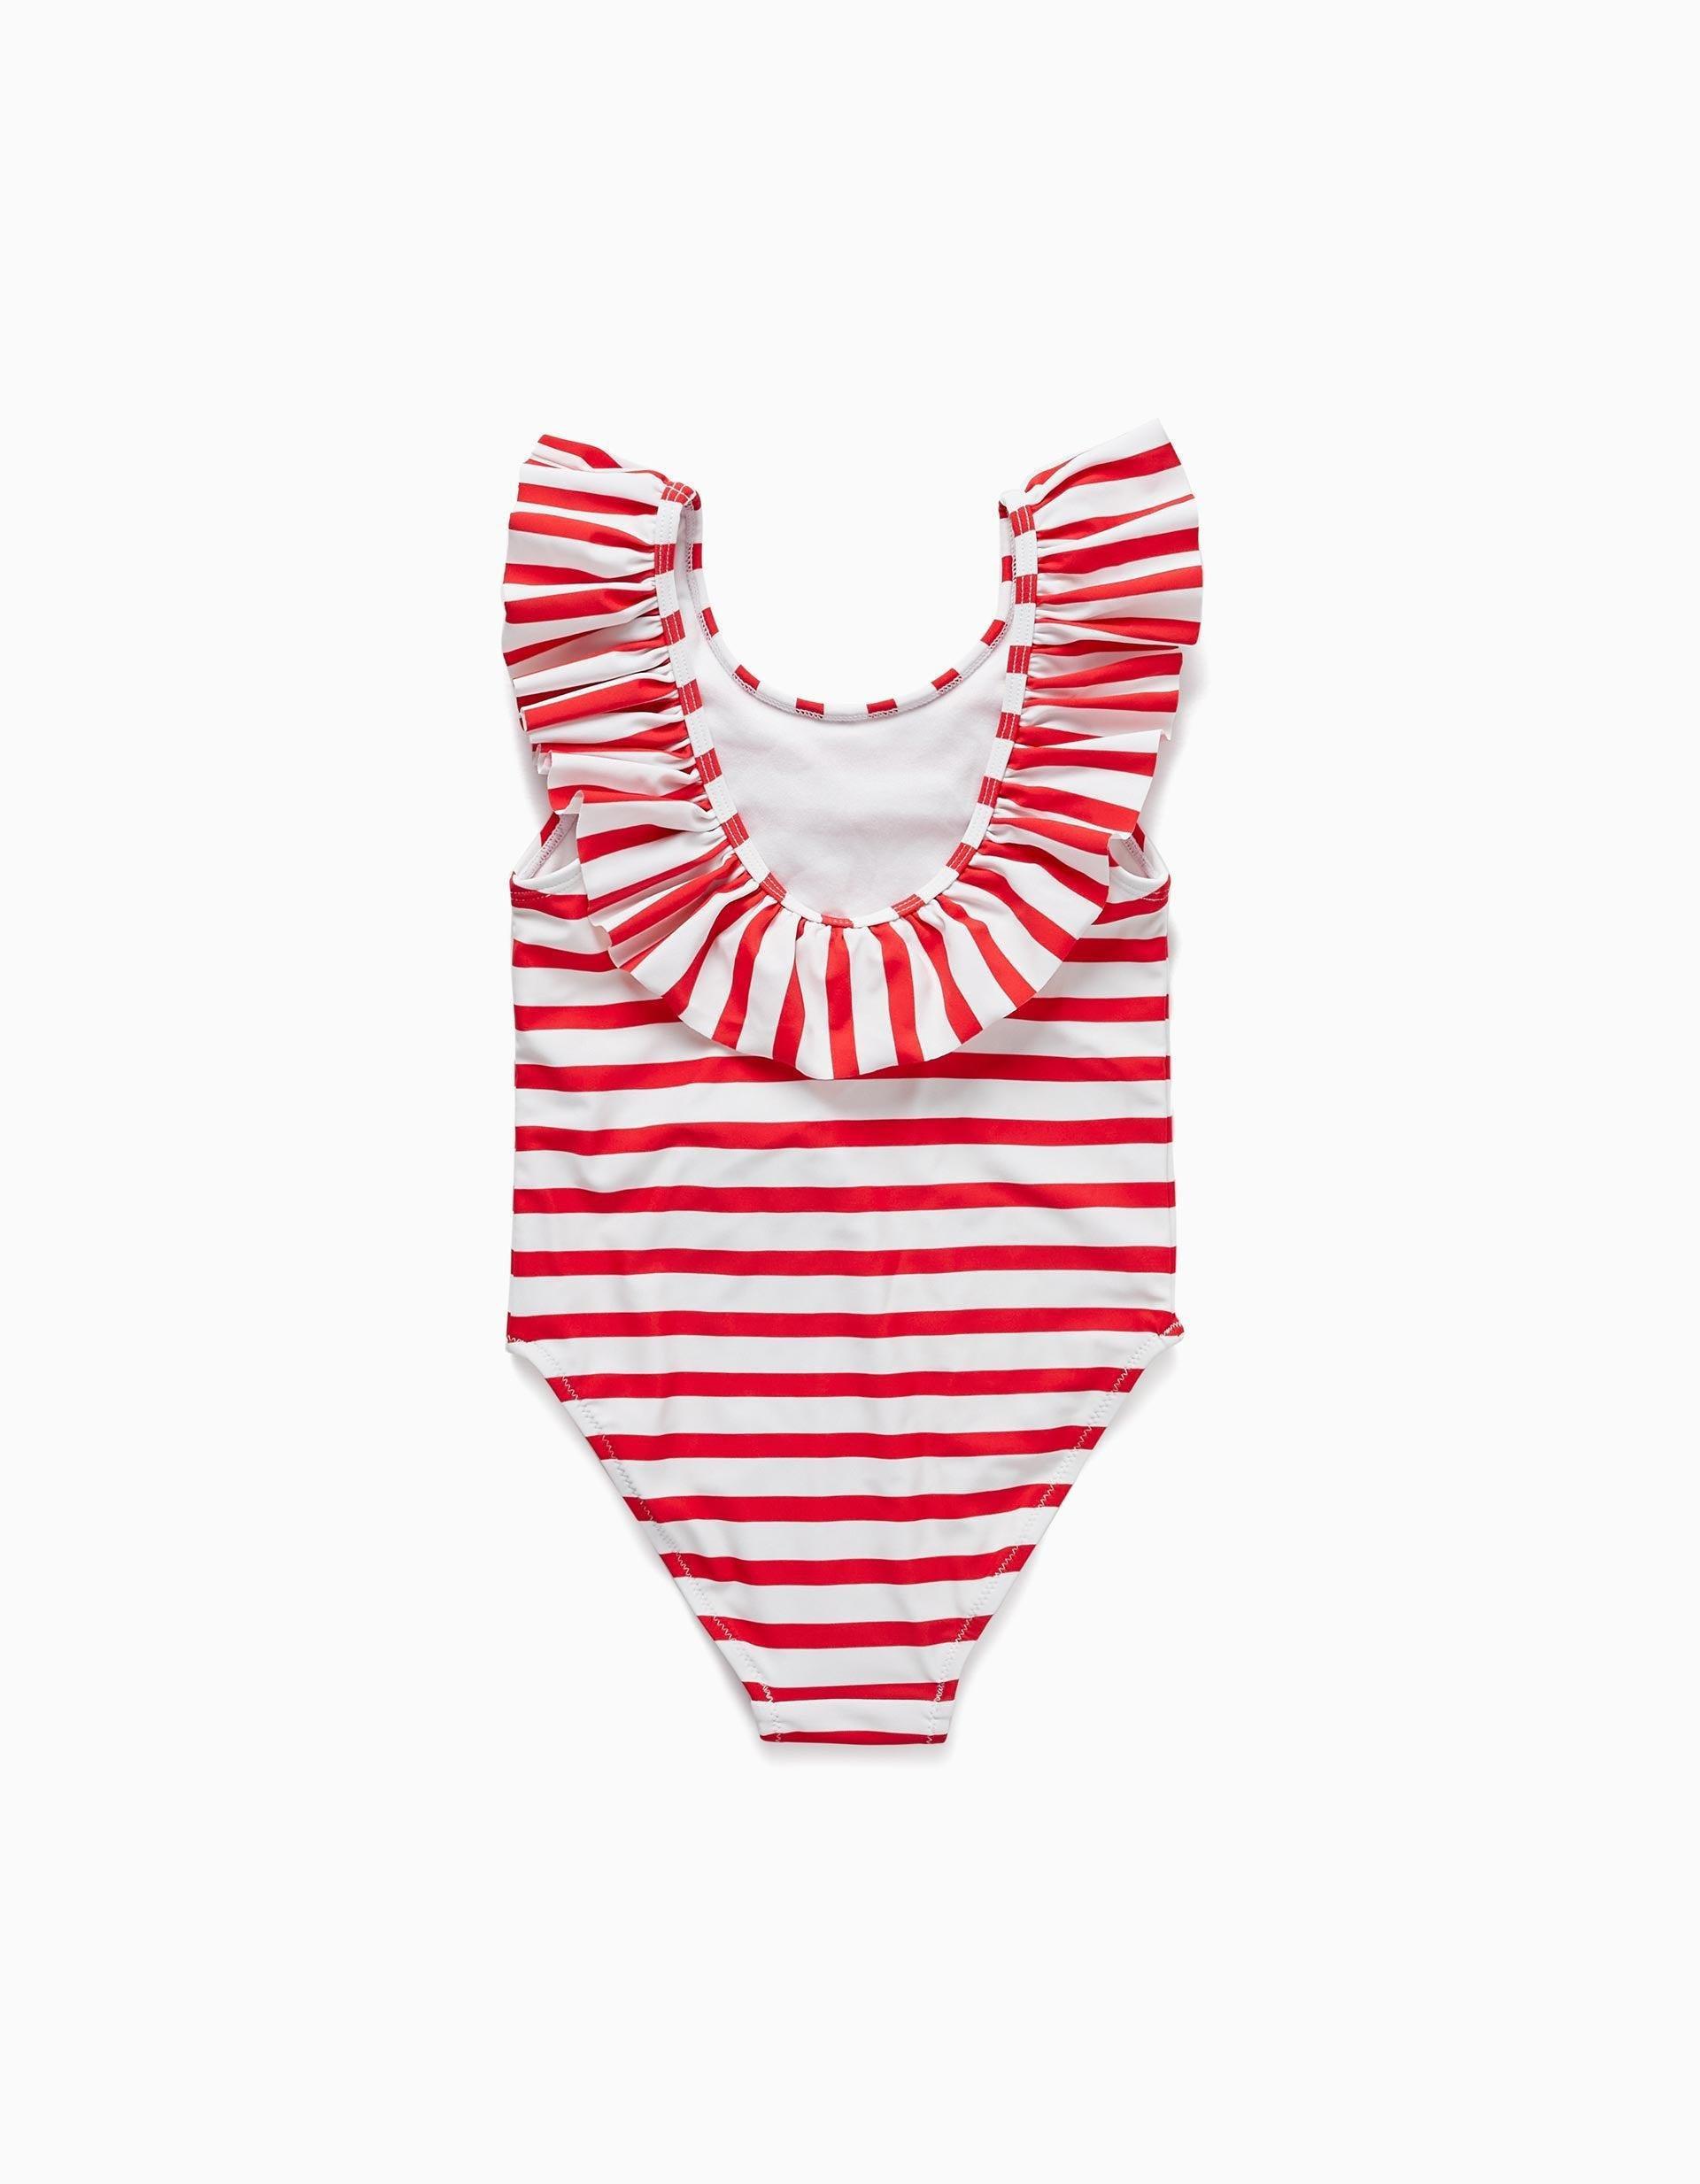 Zippy - Red Striped Swimsuit, Kids Girls